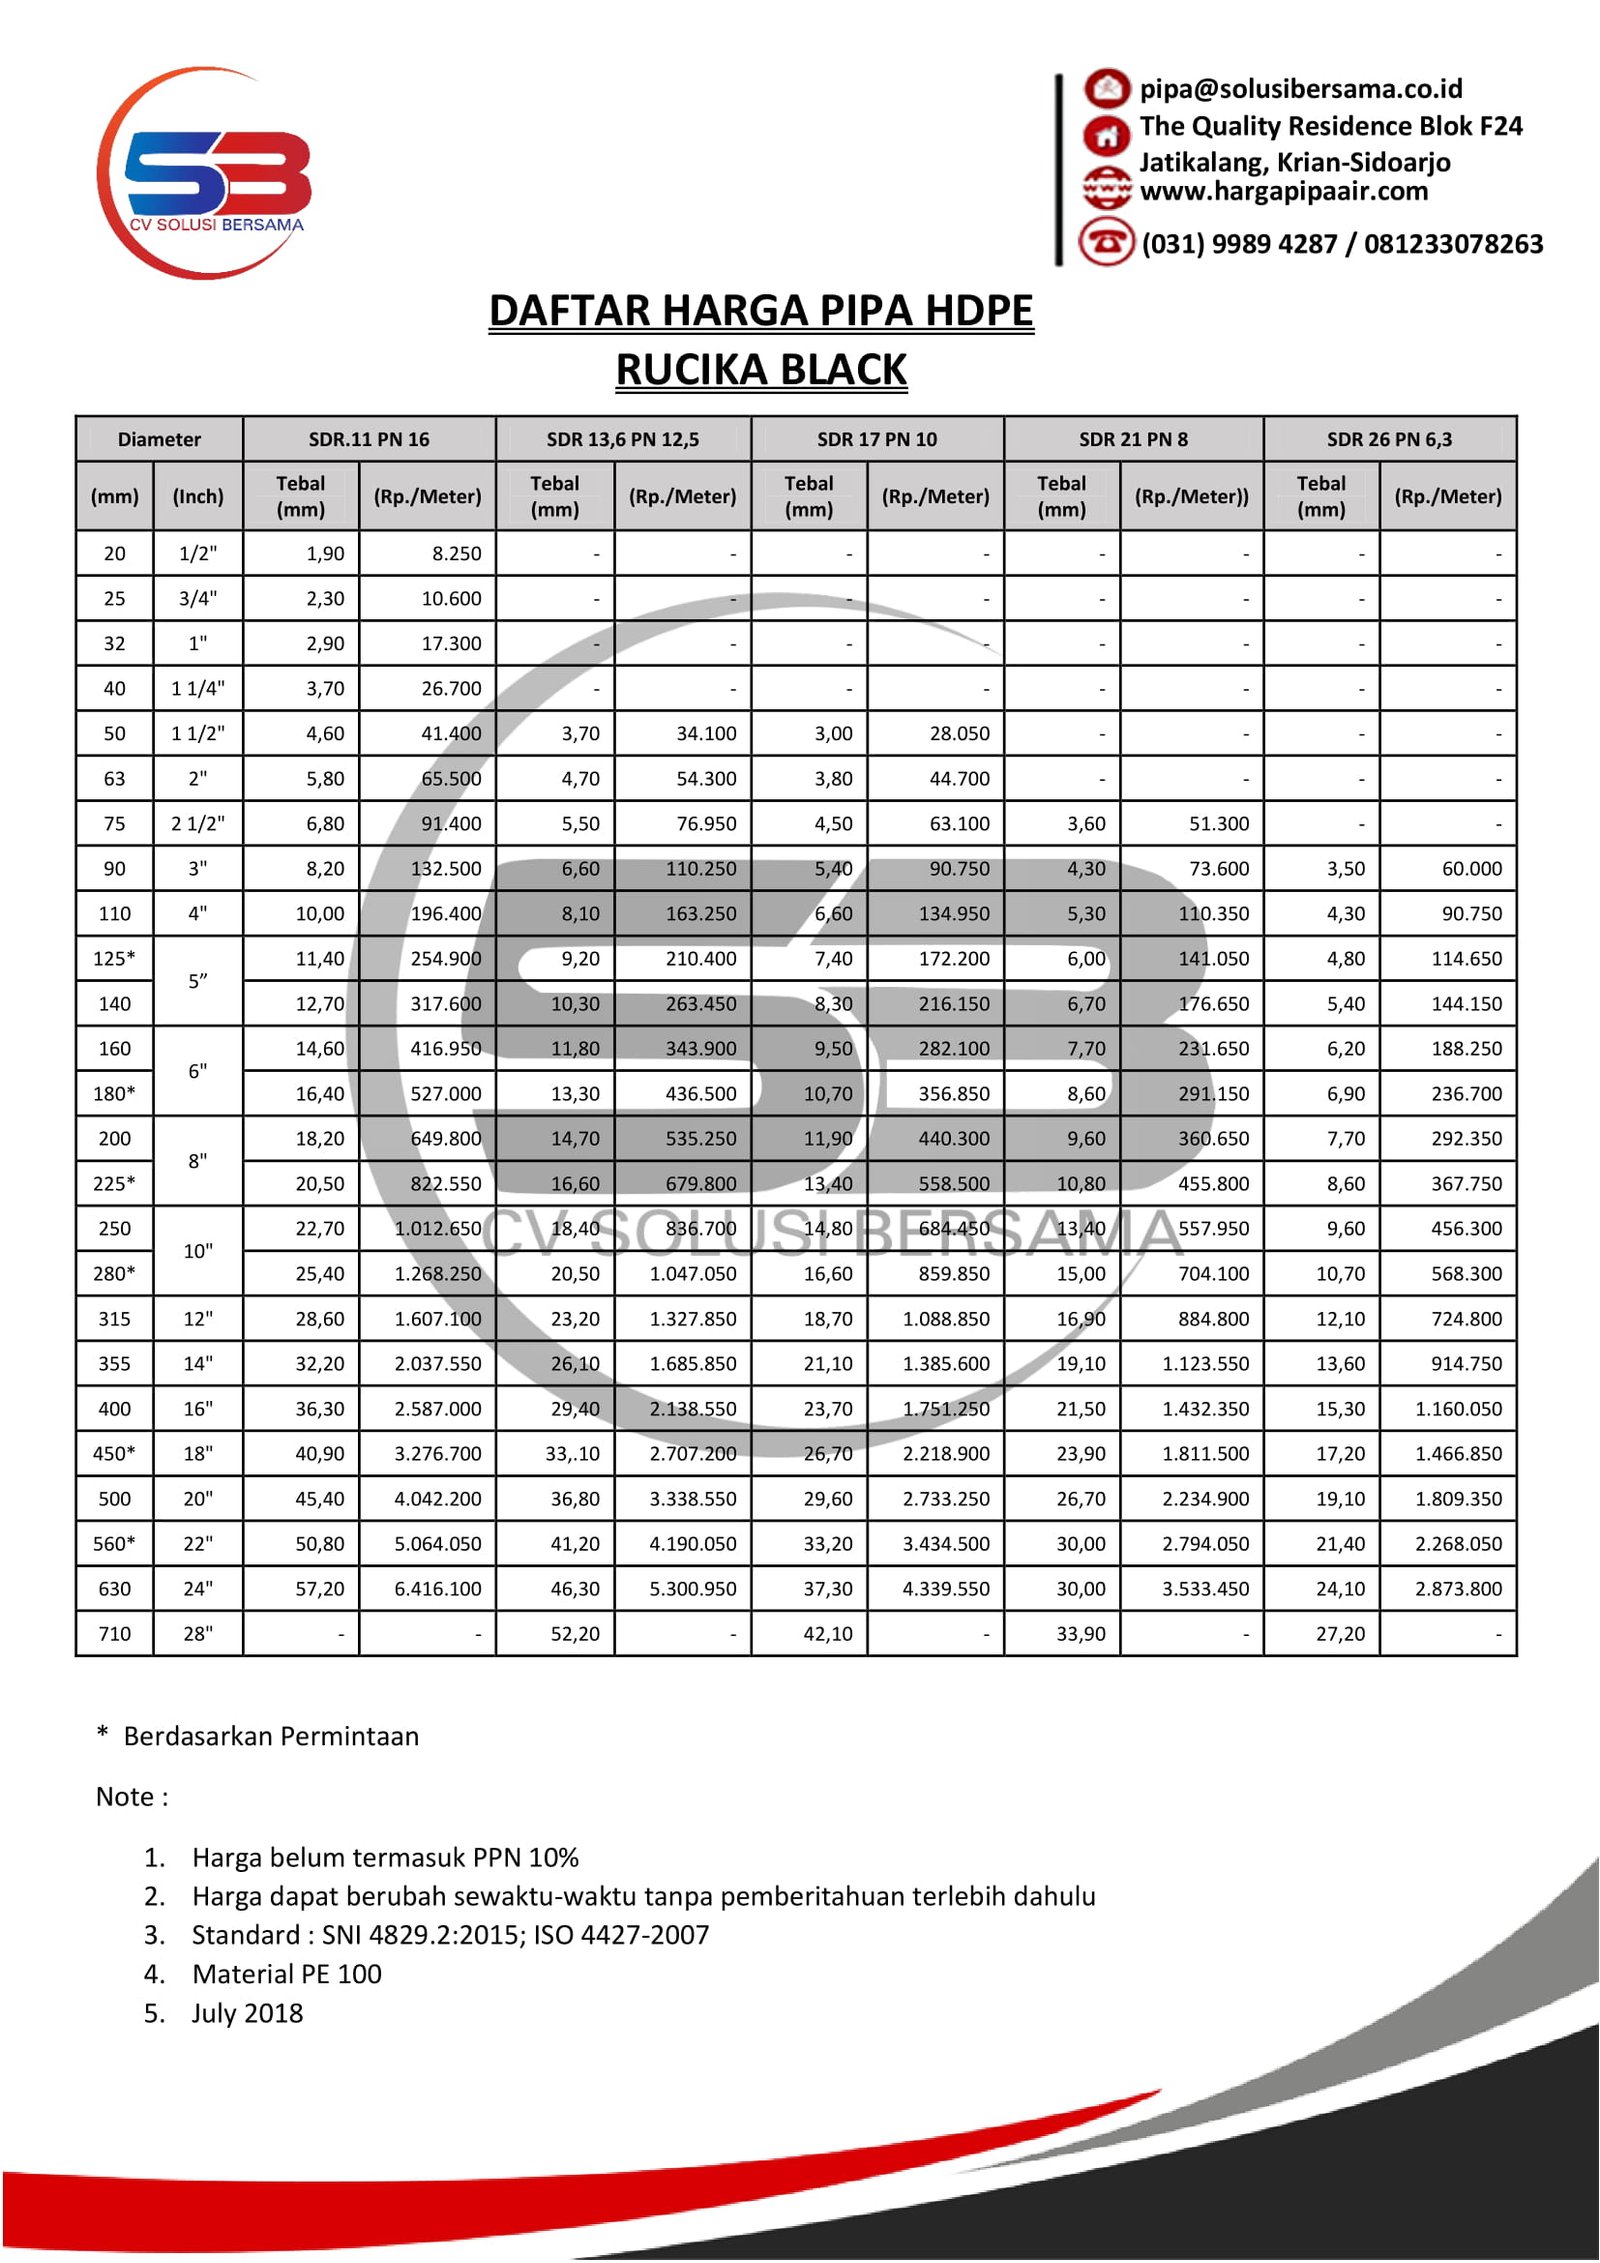 Daftar Harga Pipa HDPE Rucika Black | Pricelist Terbaru 2019 http://solusibersama.co.id